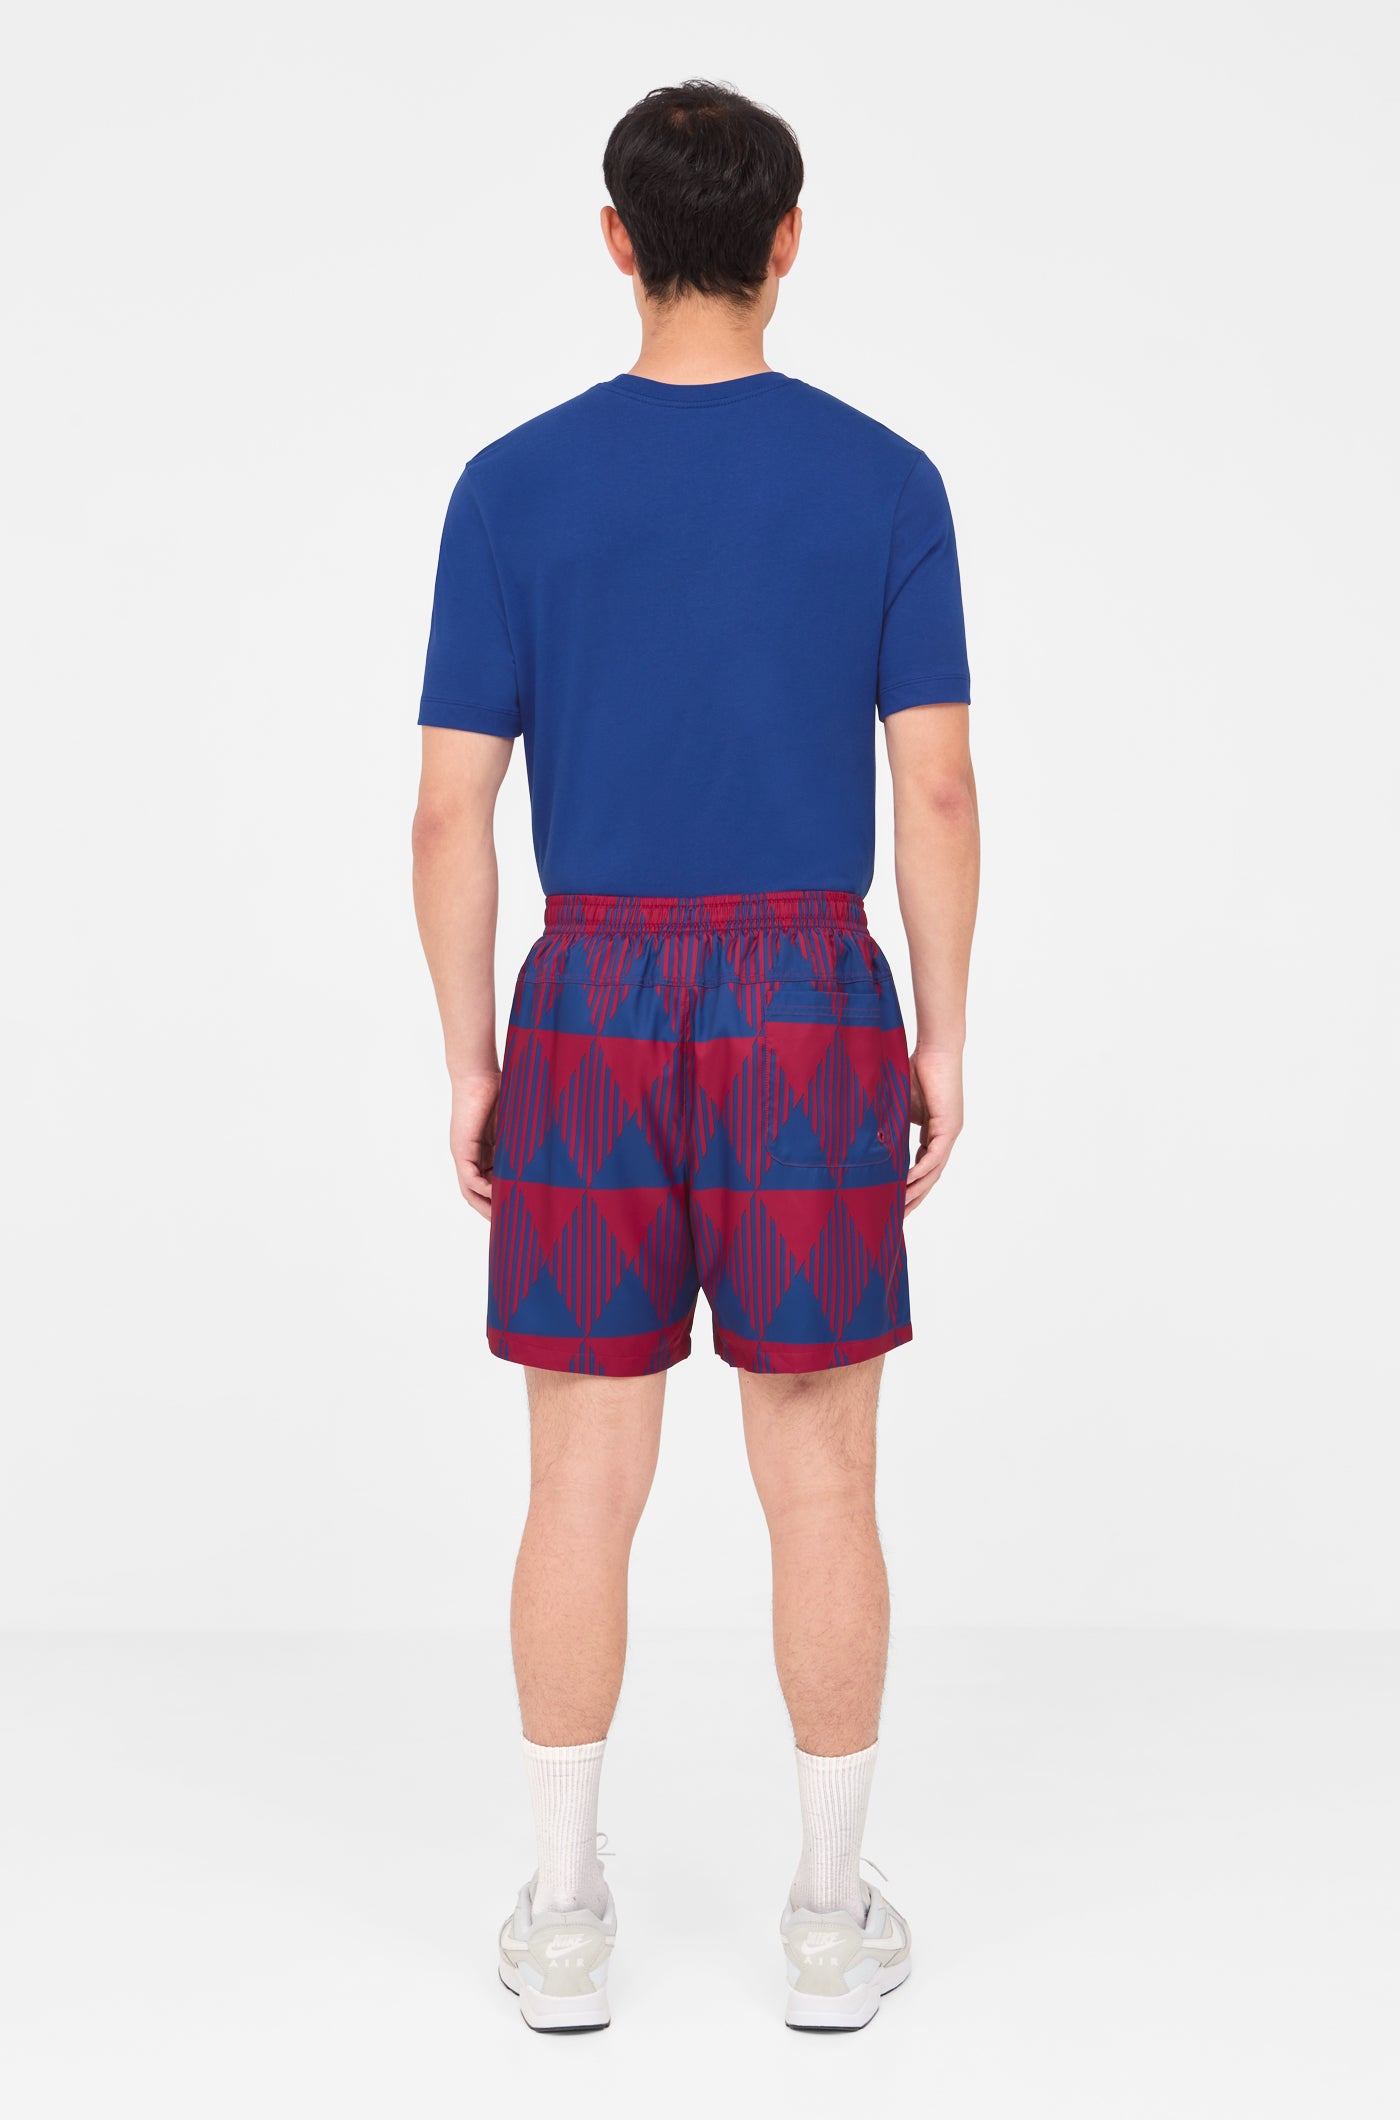 Printed shorts FC Barcelona 23/24